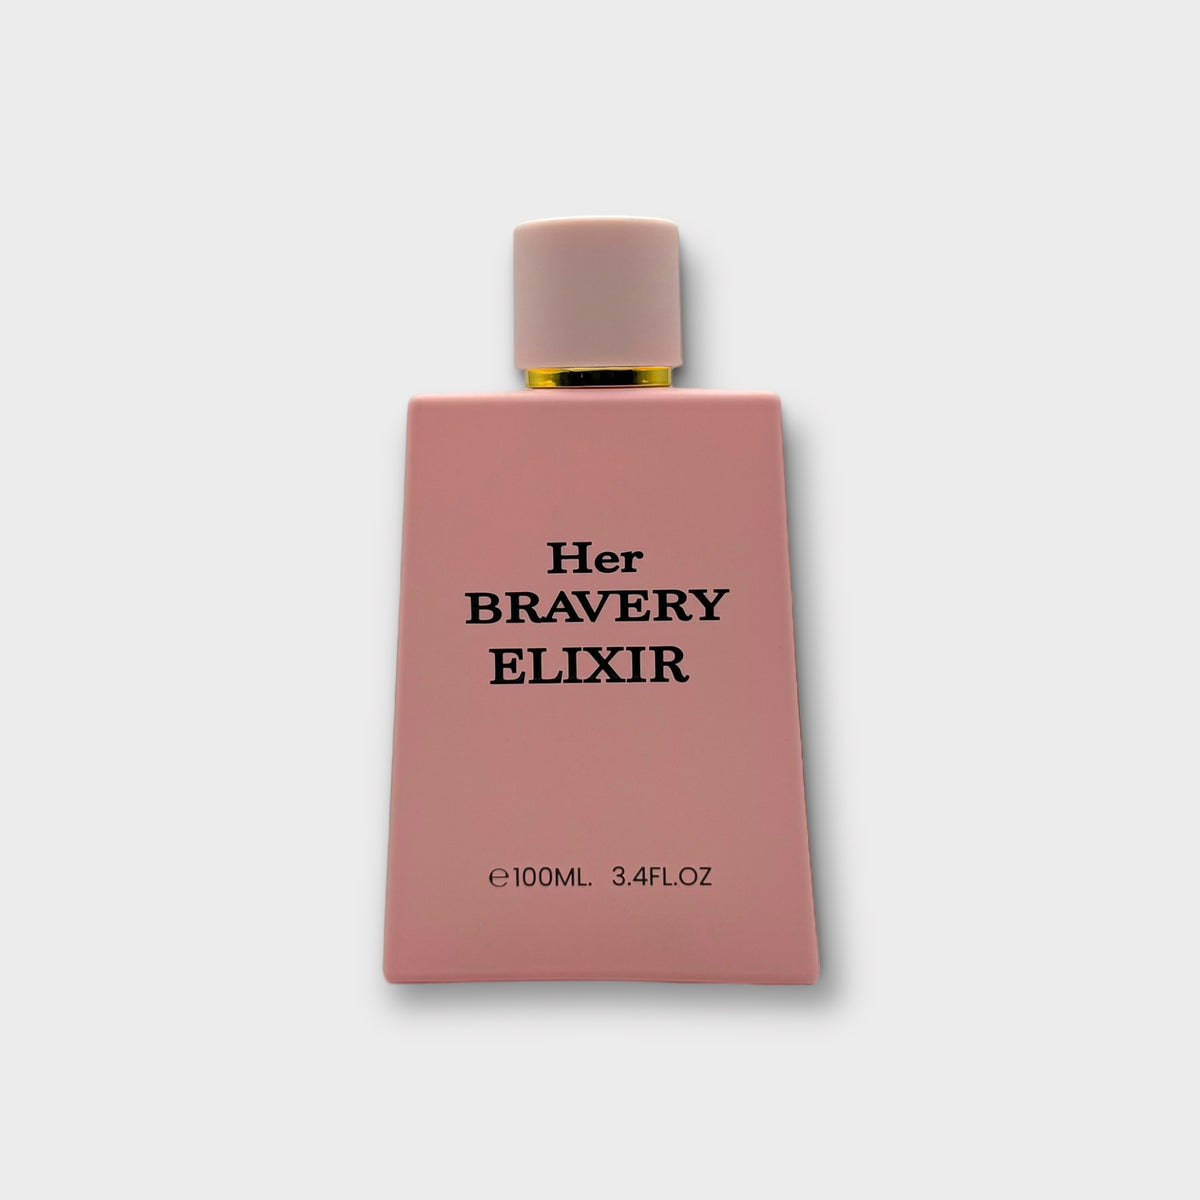 Her Bravery Elixir